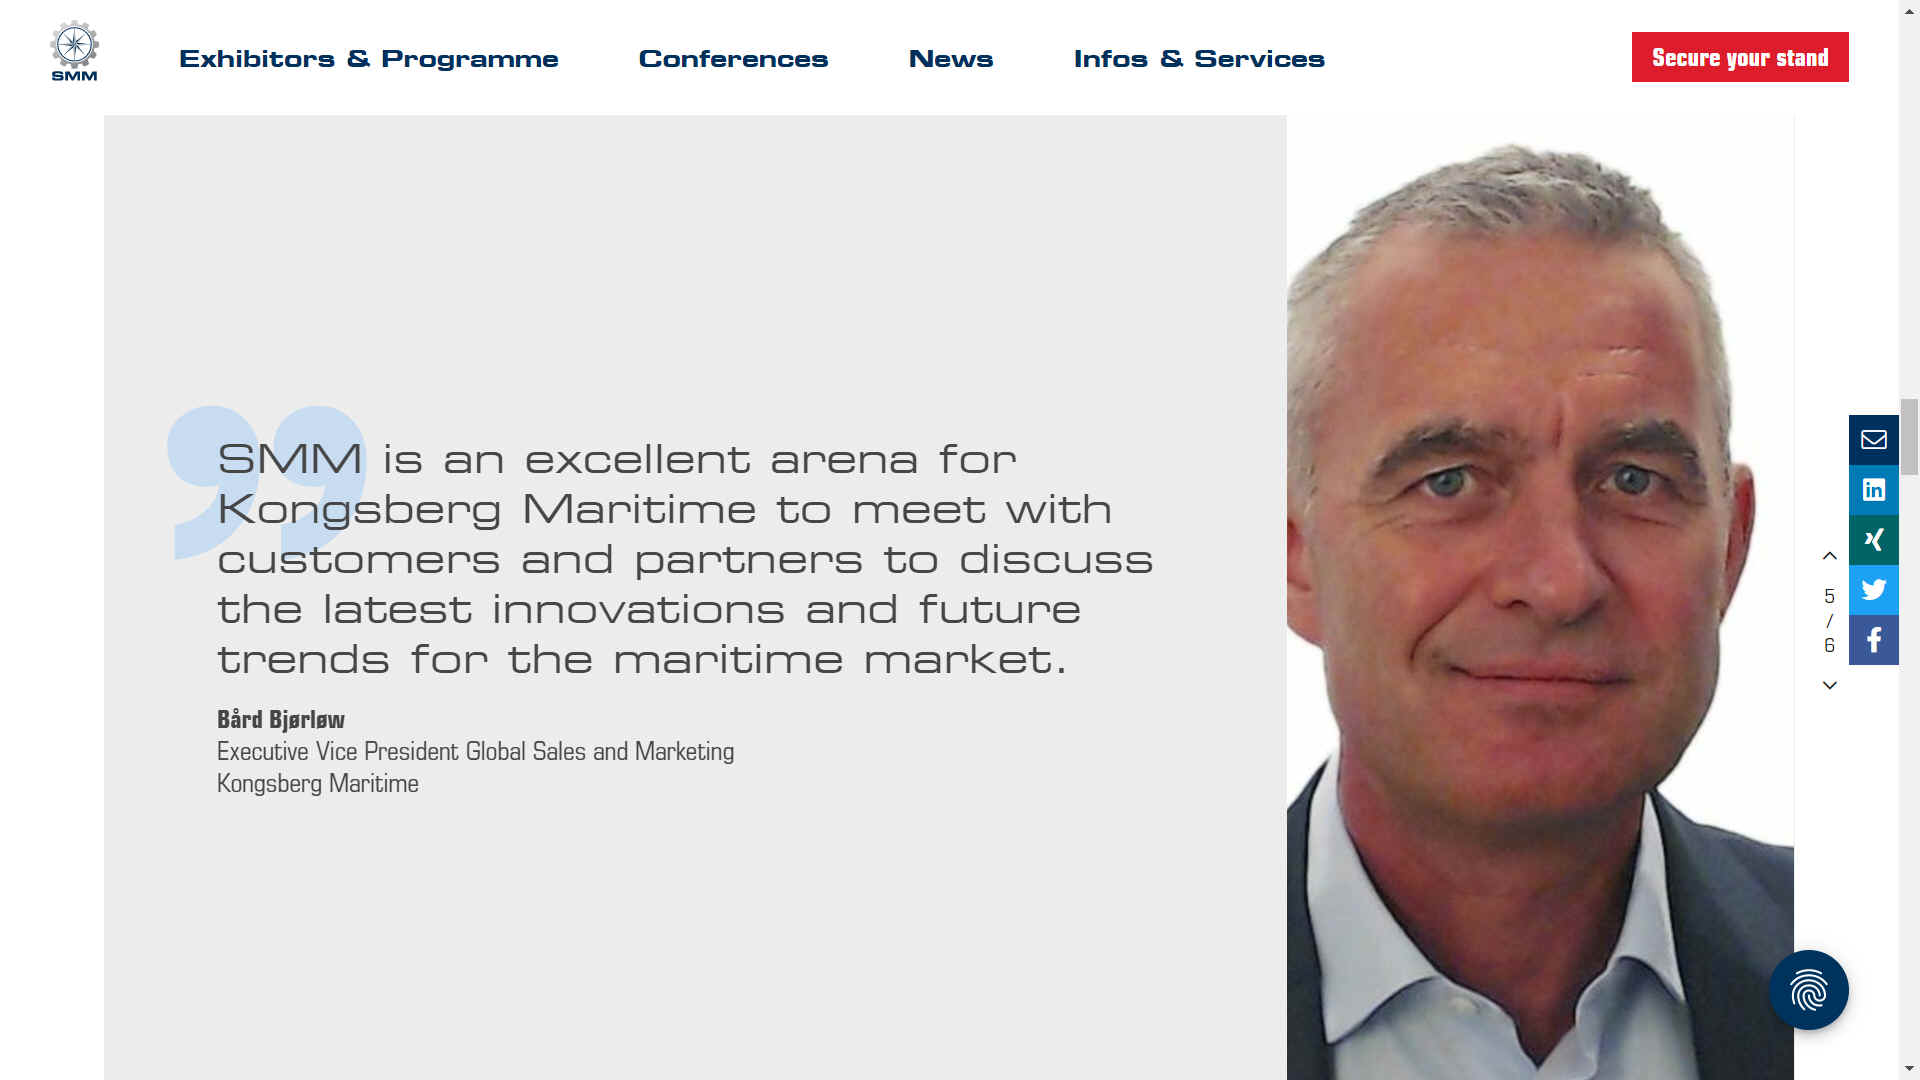 Bard Bjerlaw - Executive Vice President Global Sales & Marketing, Kongsberg Maritime